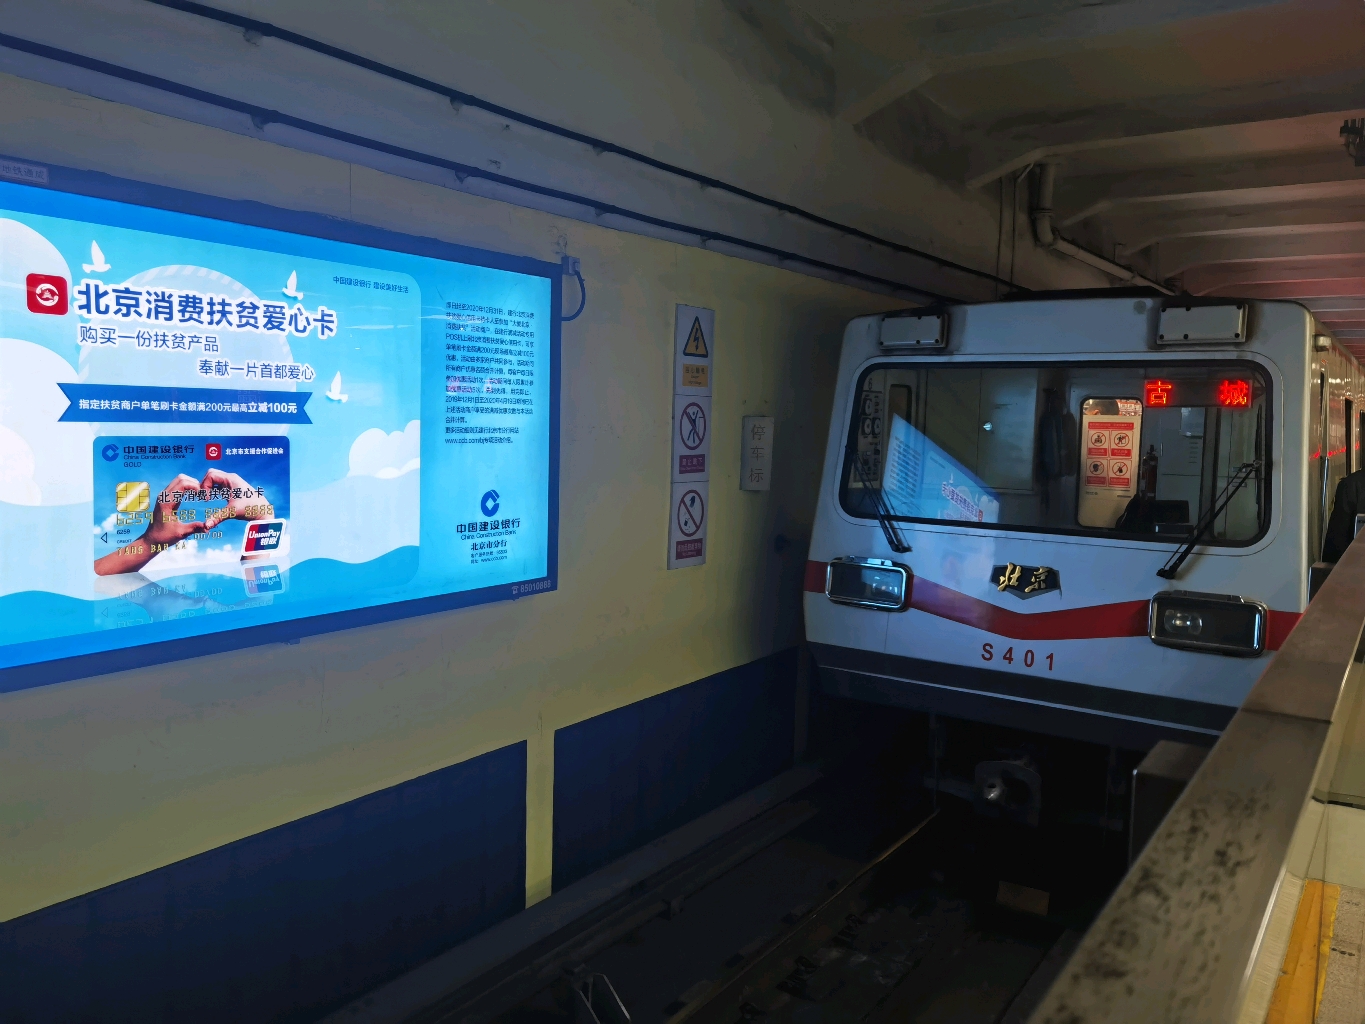 dkz4(俗称"v车")在北京地铁一号线已服役多年,31组车各具特色,并不断